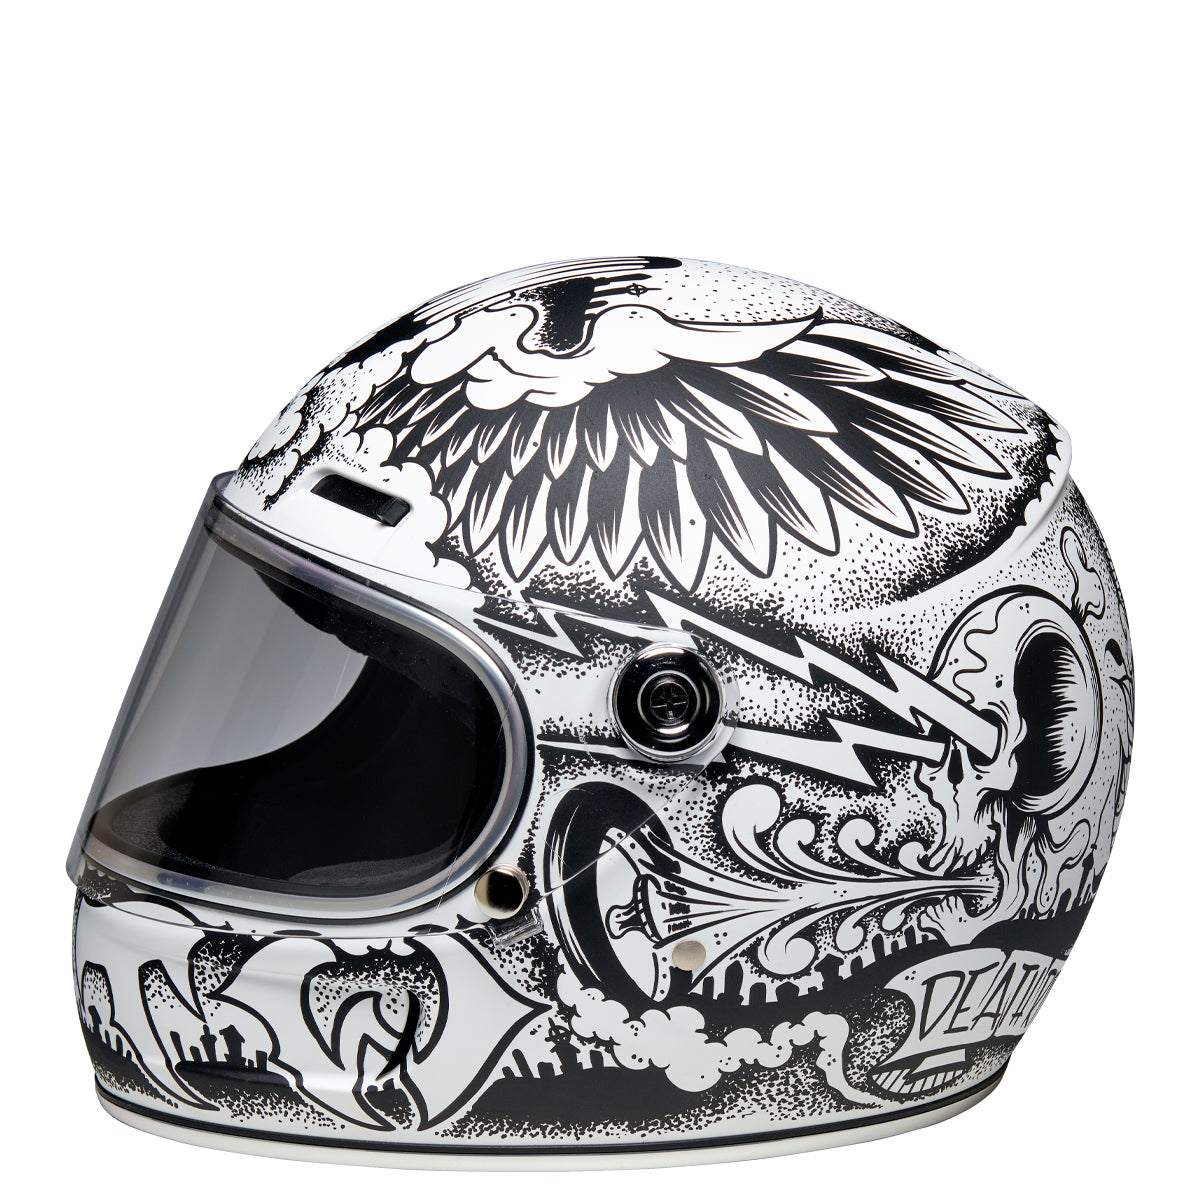 Custom Painted Gringo SV Helmet by Darren Mckeag